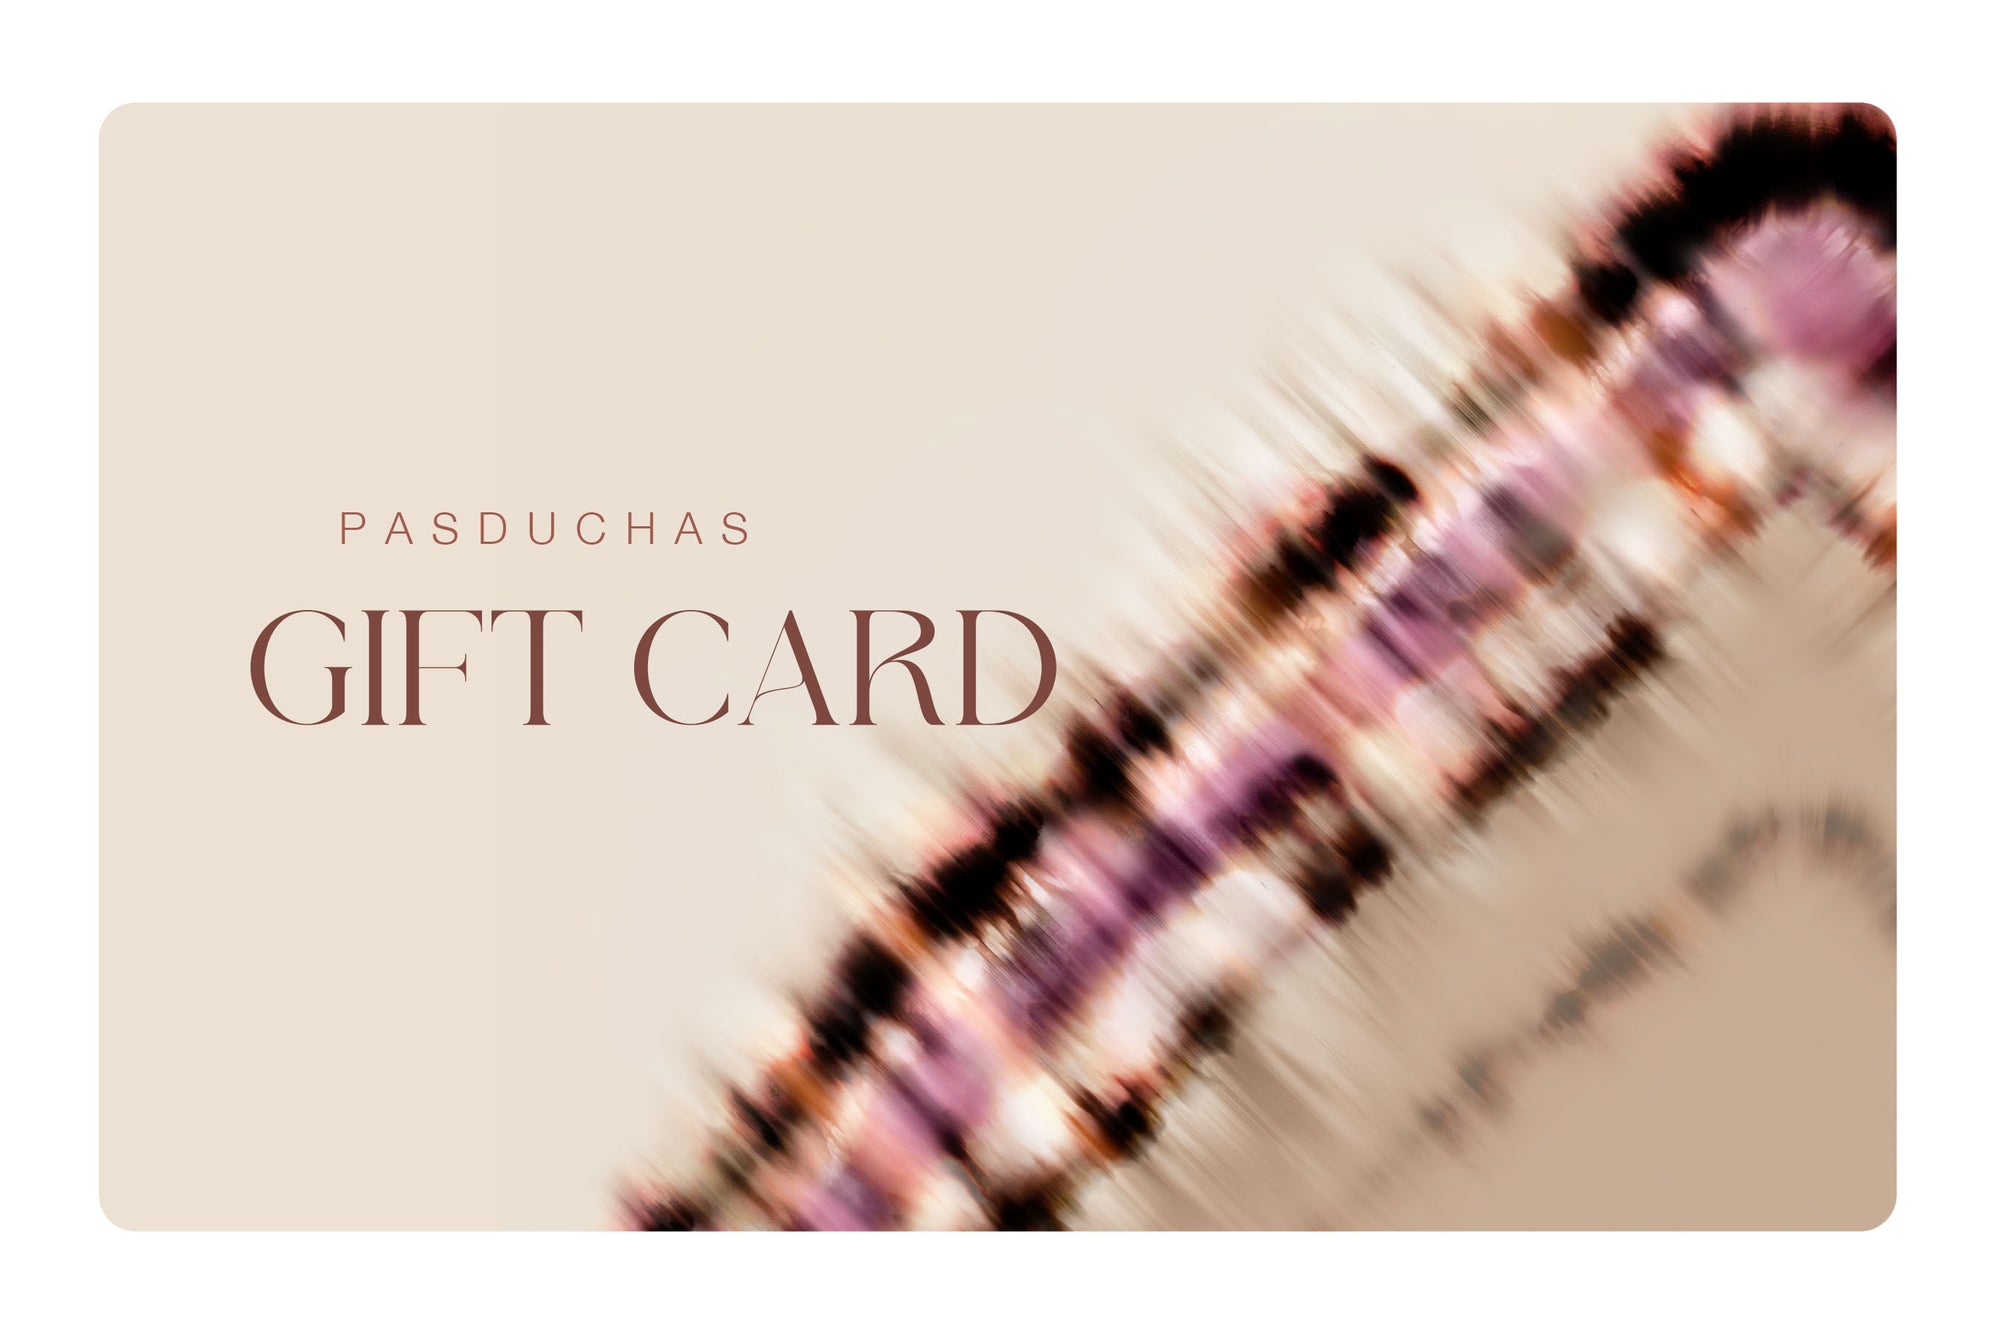 PASDUCHAS GIFT CARD